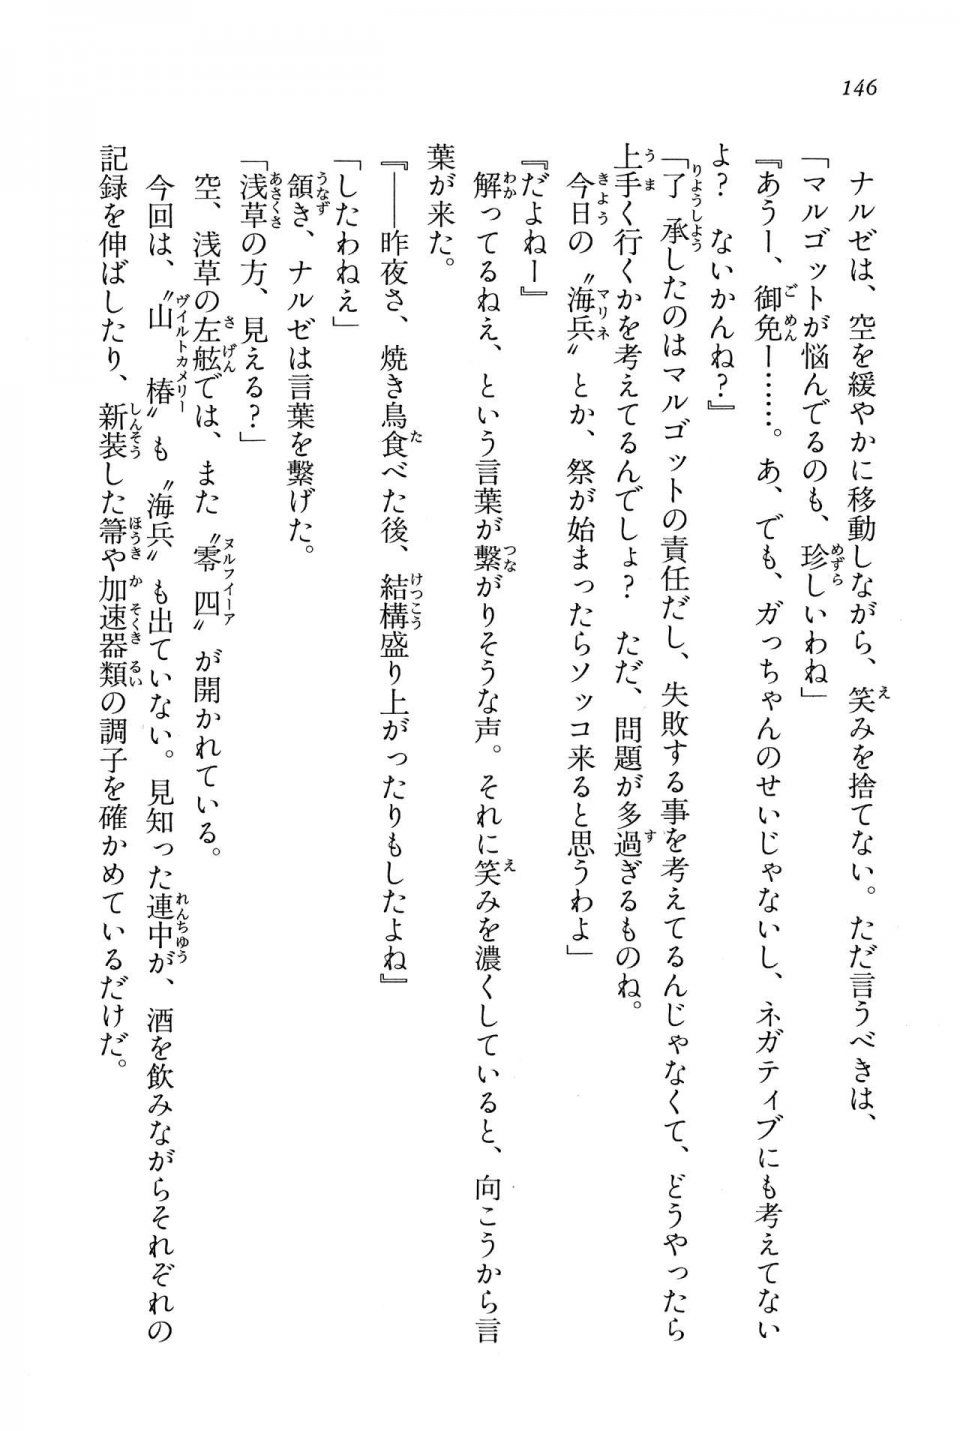 Kyoukai Senjou no Horizon BD Special Mininovel Vol 6(3B) - Photo #150